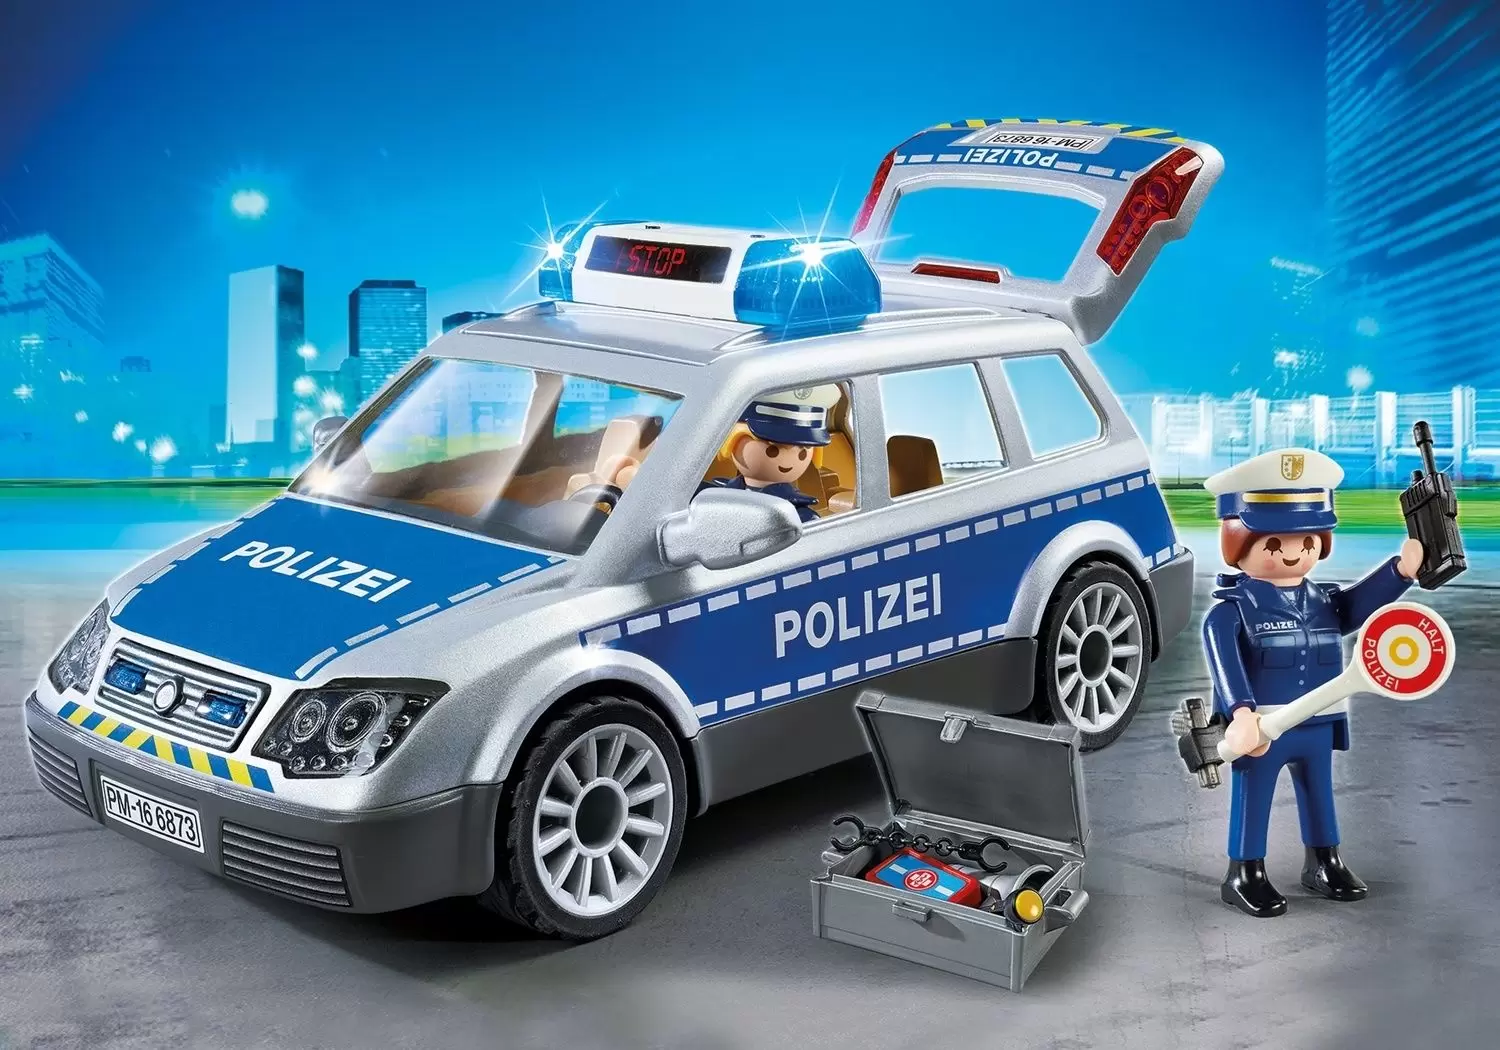 Playmobil Policier - Voiture de patrouille de police allemande (Polizei)